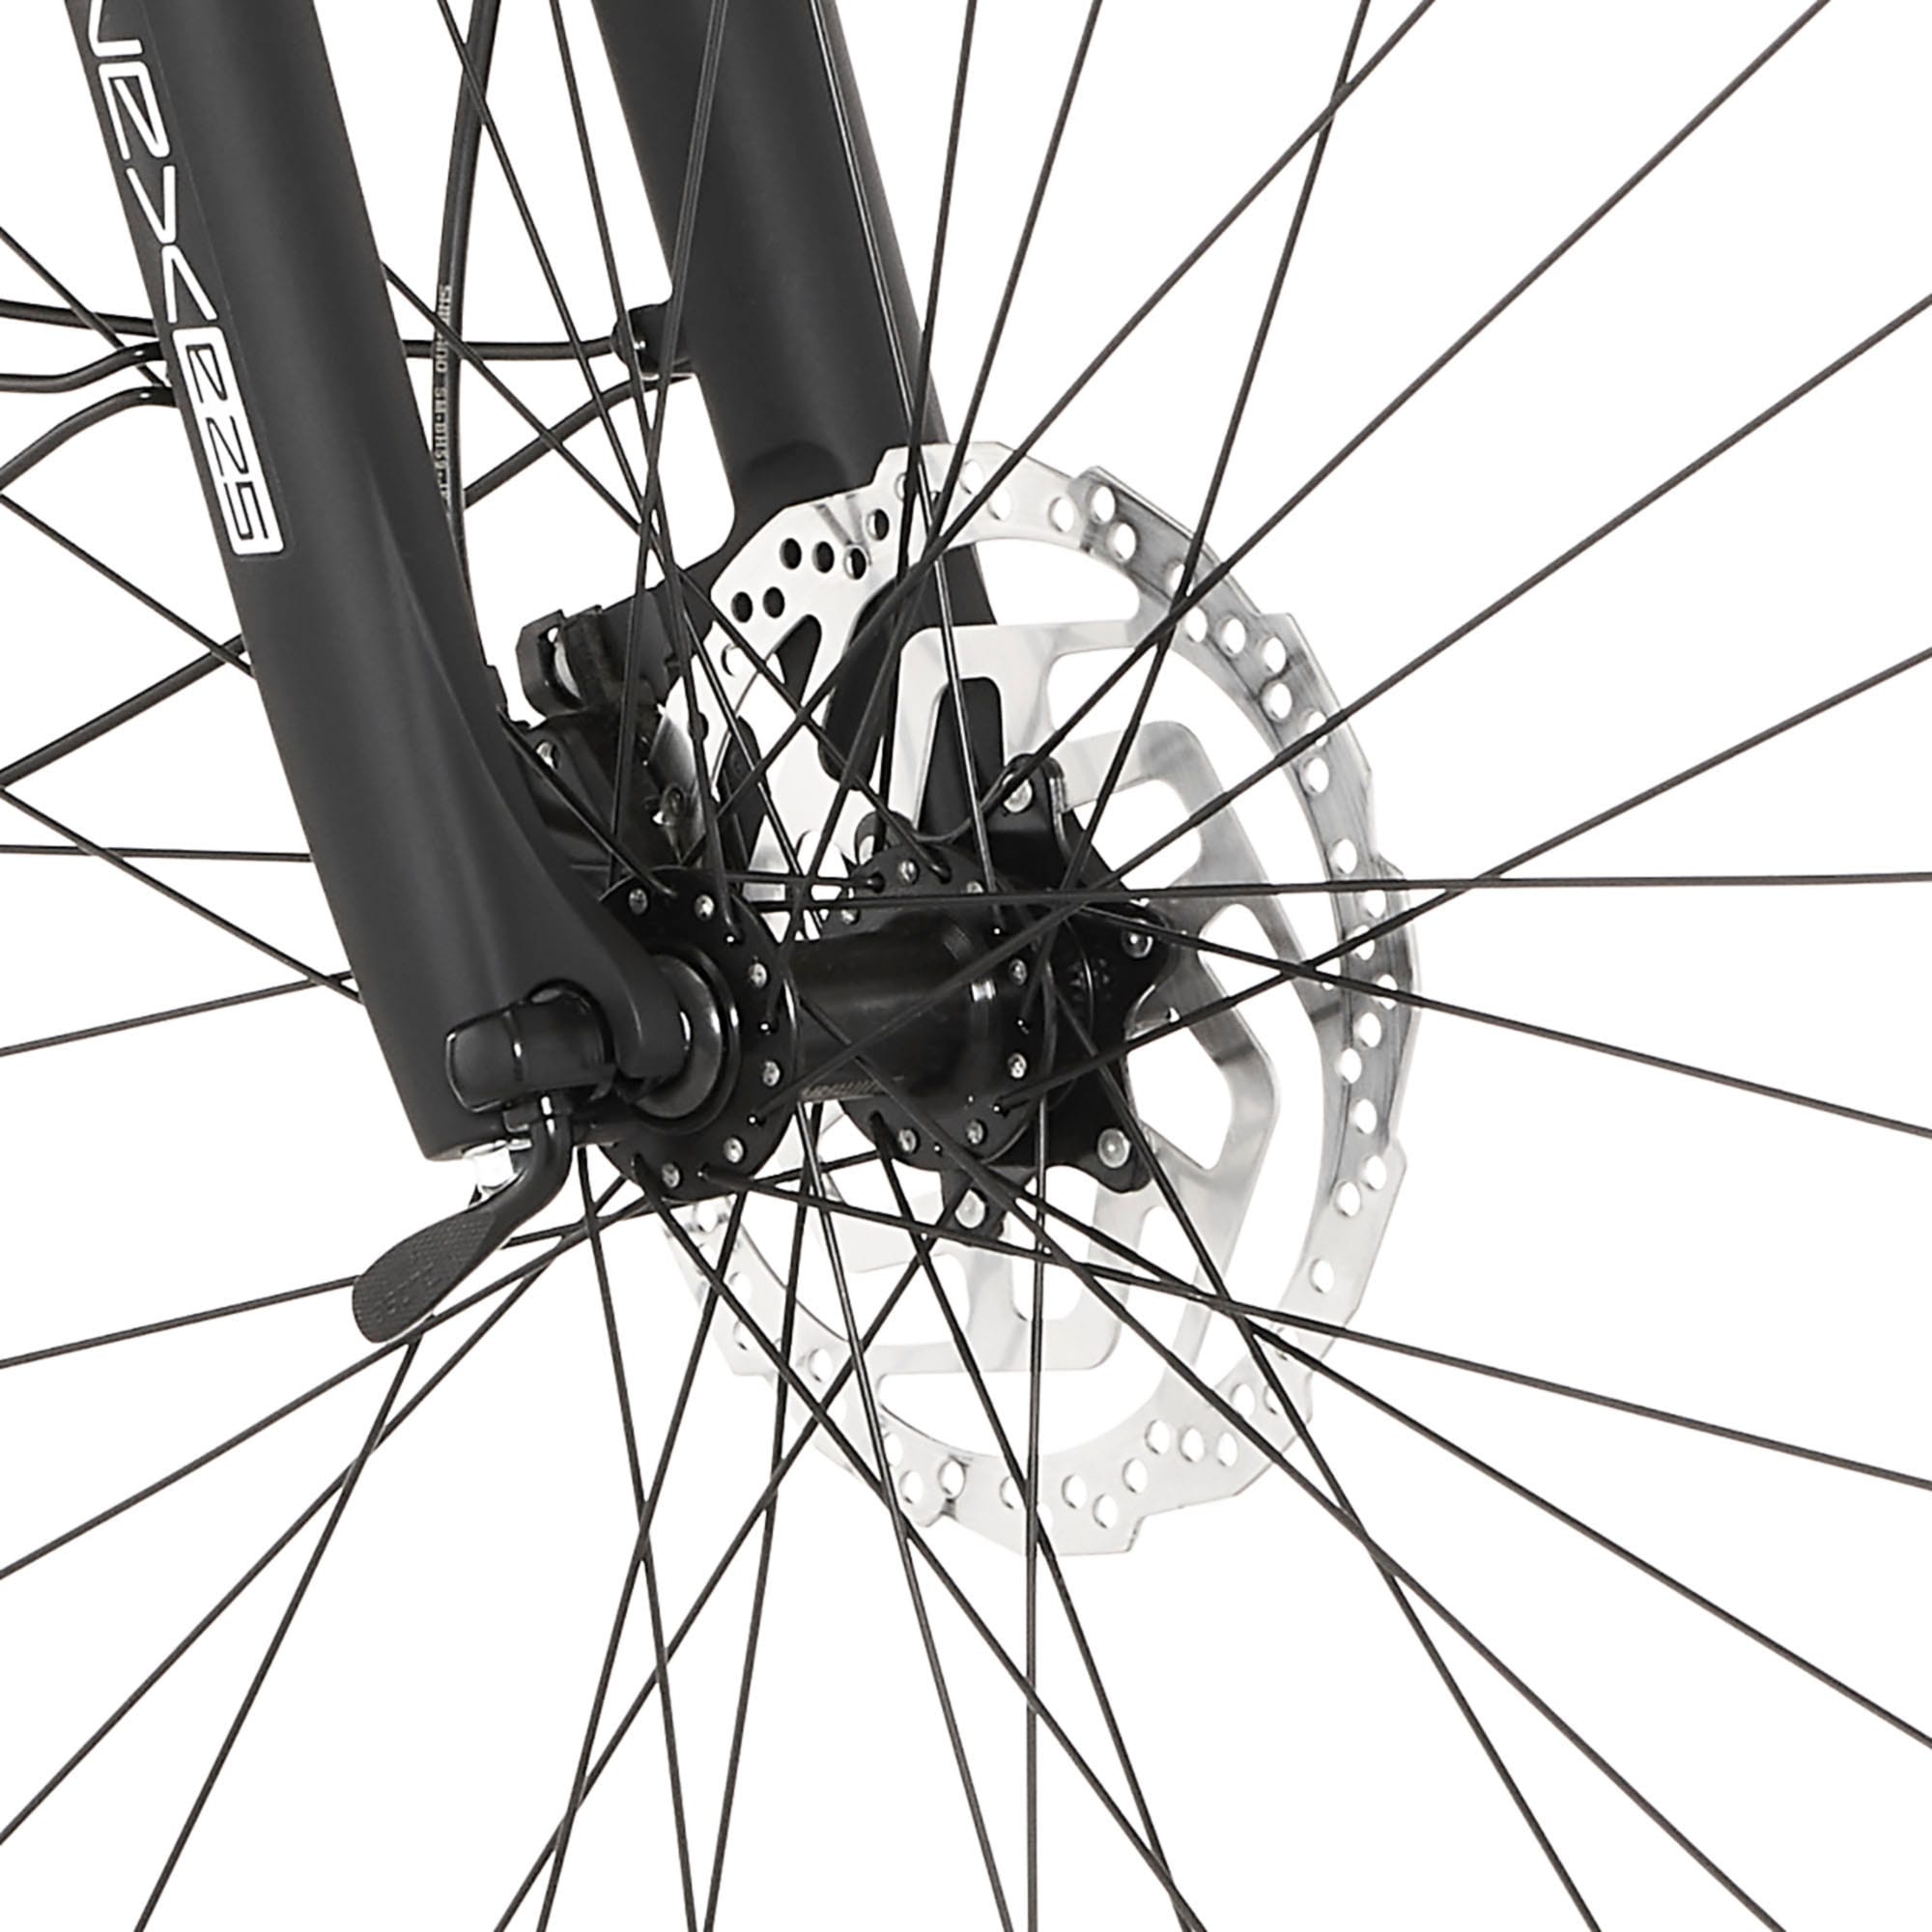 FISCHER Fahrrad E-Bike »VIATOR 1.0 Diamant 50«, 8 Gang, Shimano, Acera, Heckmotor 250 W, Pedelec für Damen u. Herren, Trekkingrad, integr. Rahmenschloss